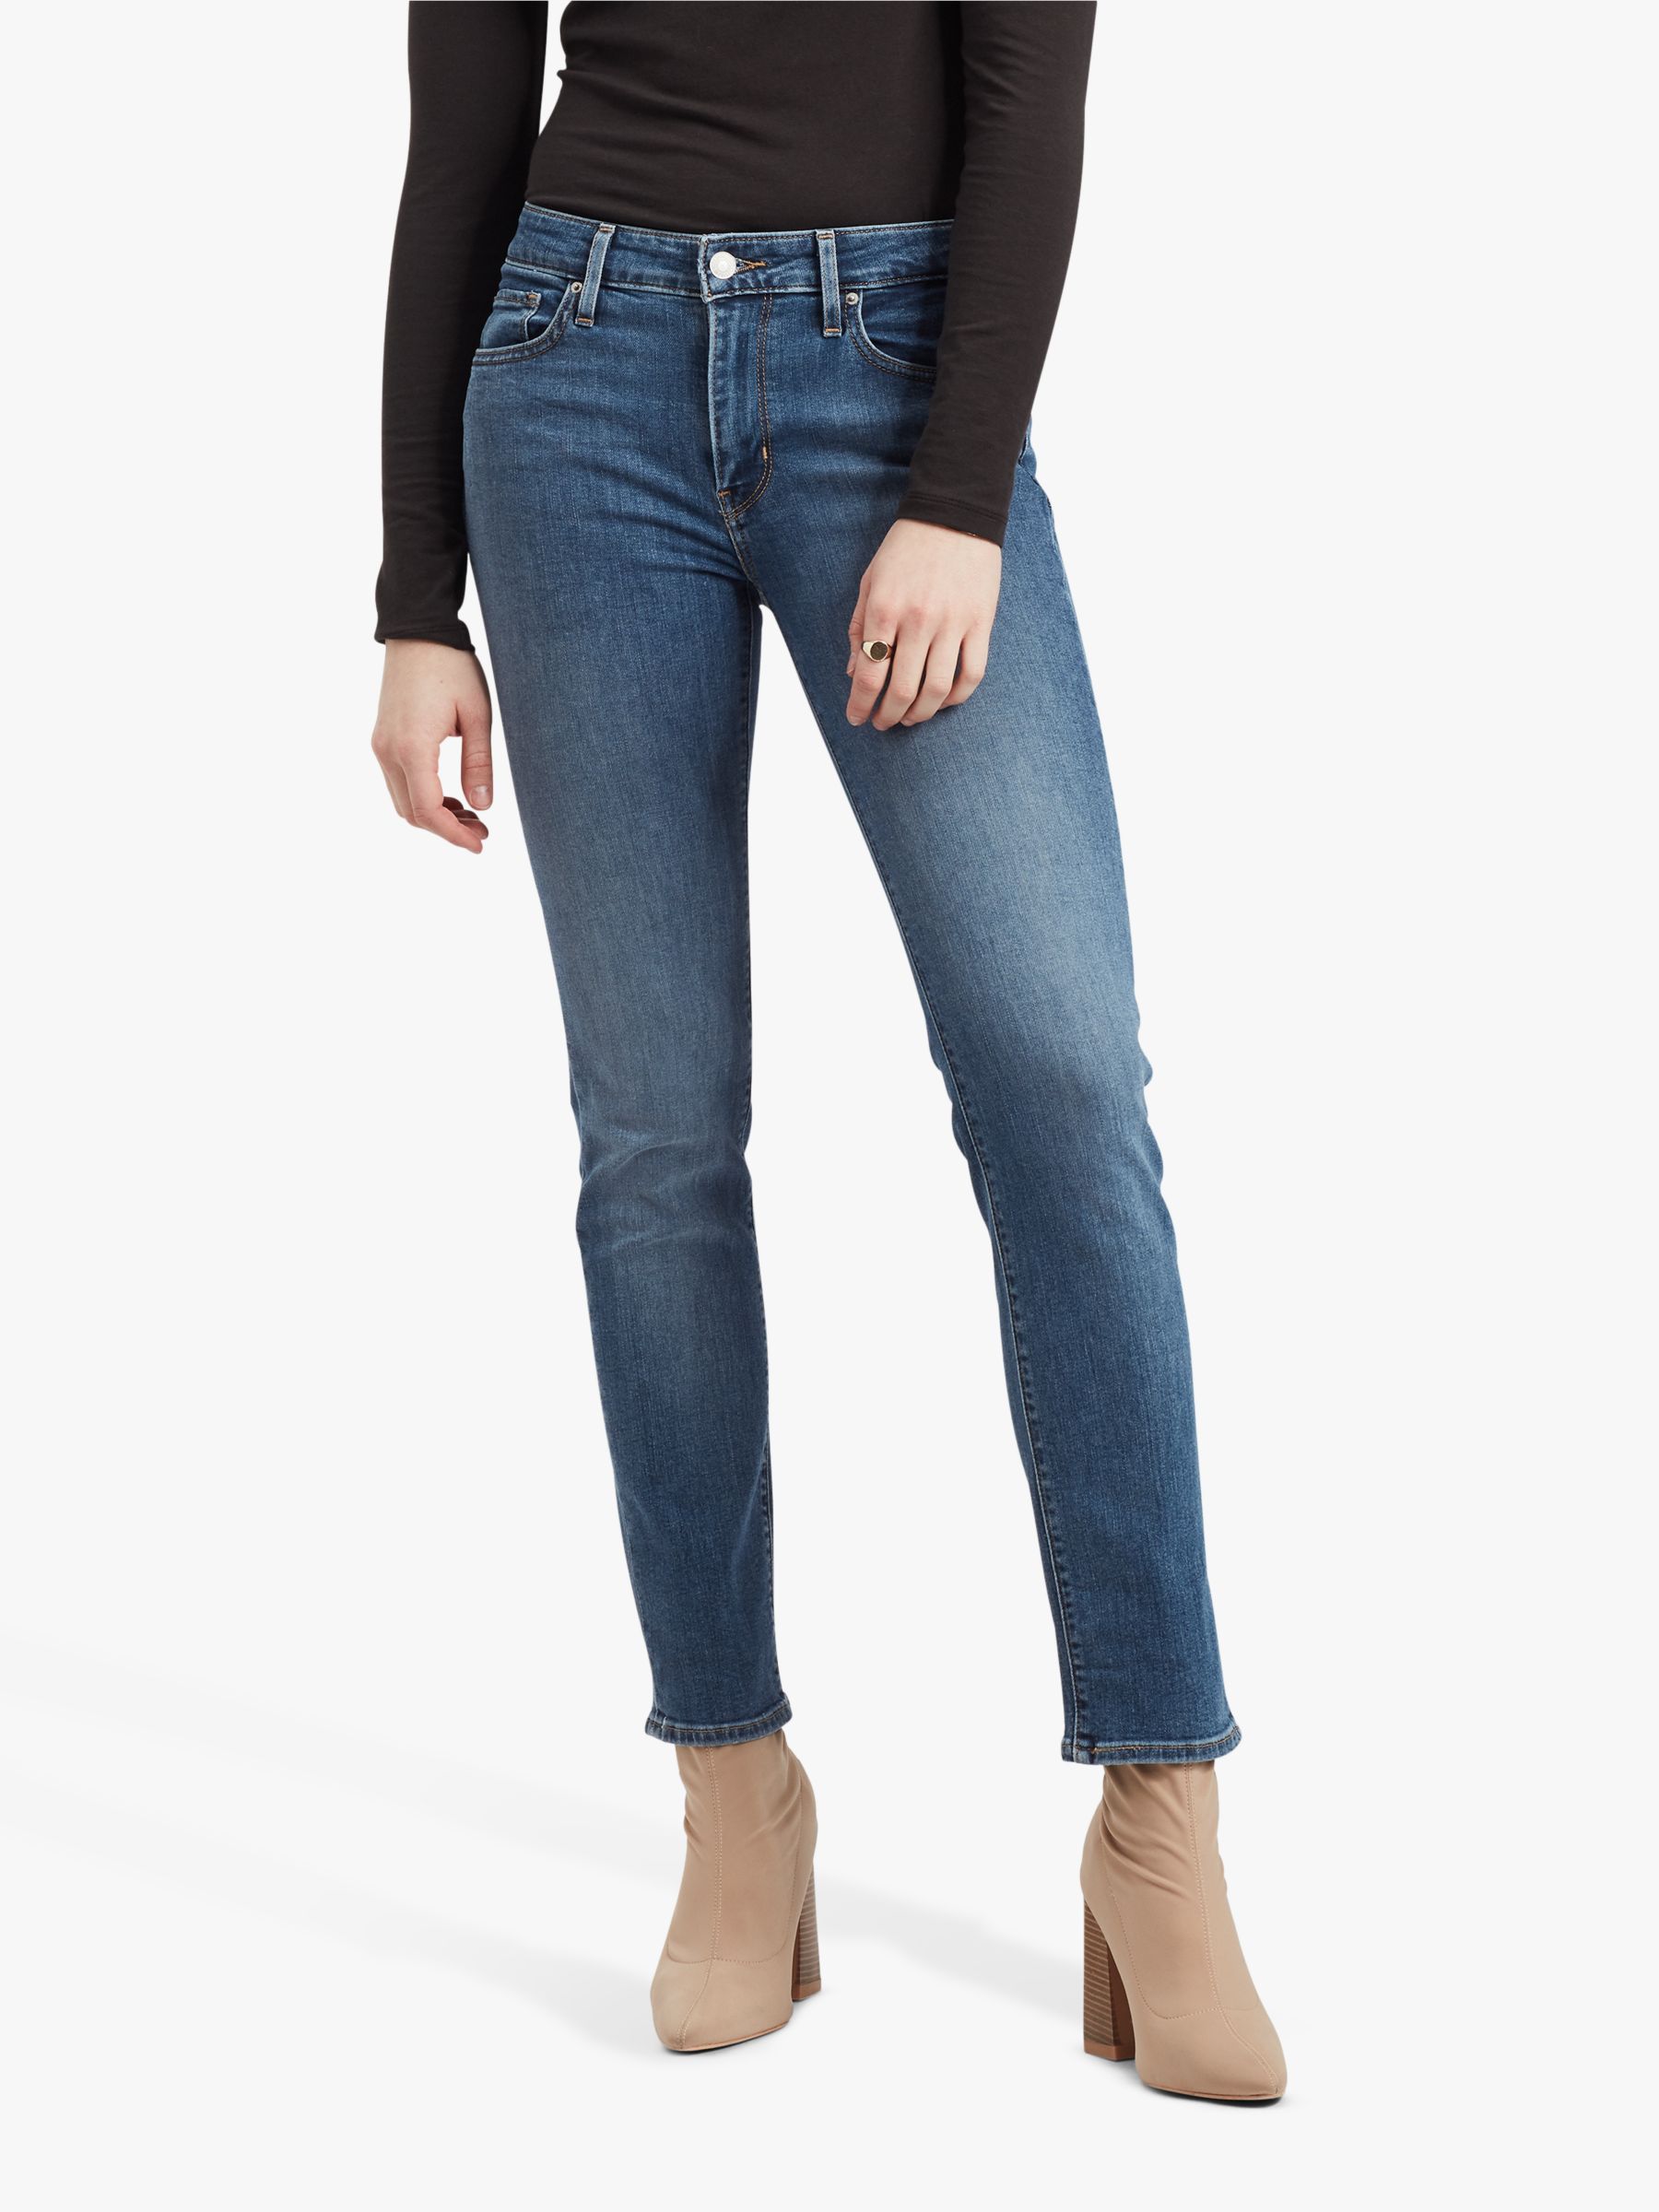 levi's 712 mid rise slim jeans